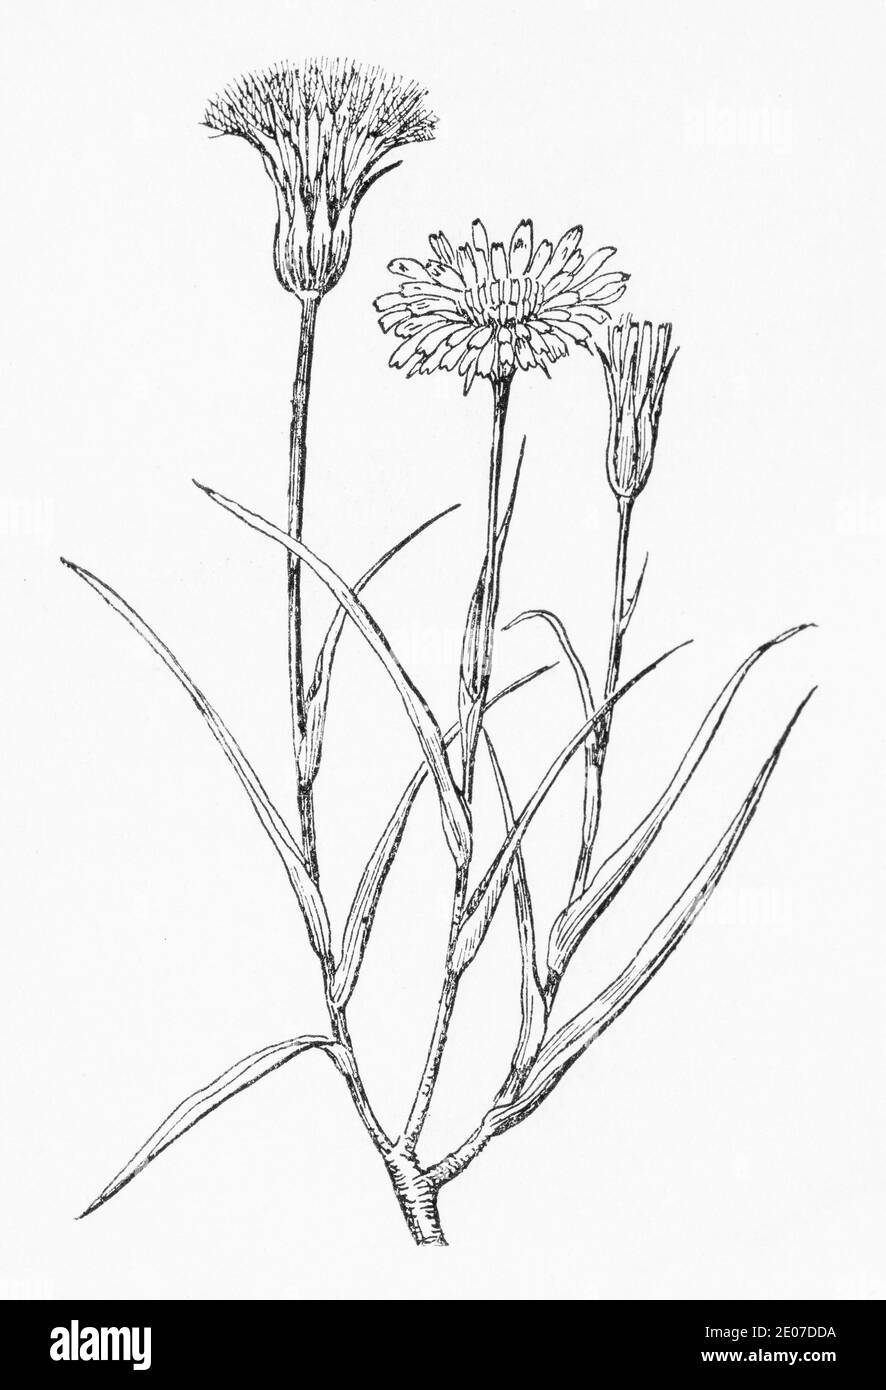 Old botanical illustration engraving of Yellow Goatsbeard / Tragopogon pratensis. Traditional medicinal herbal plant. See Notes Stock Photo